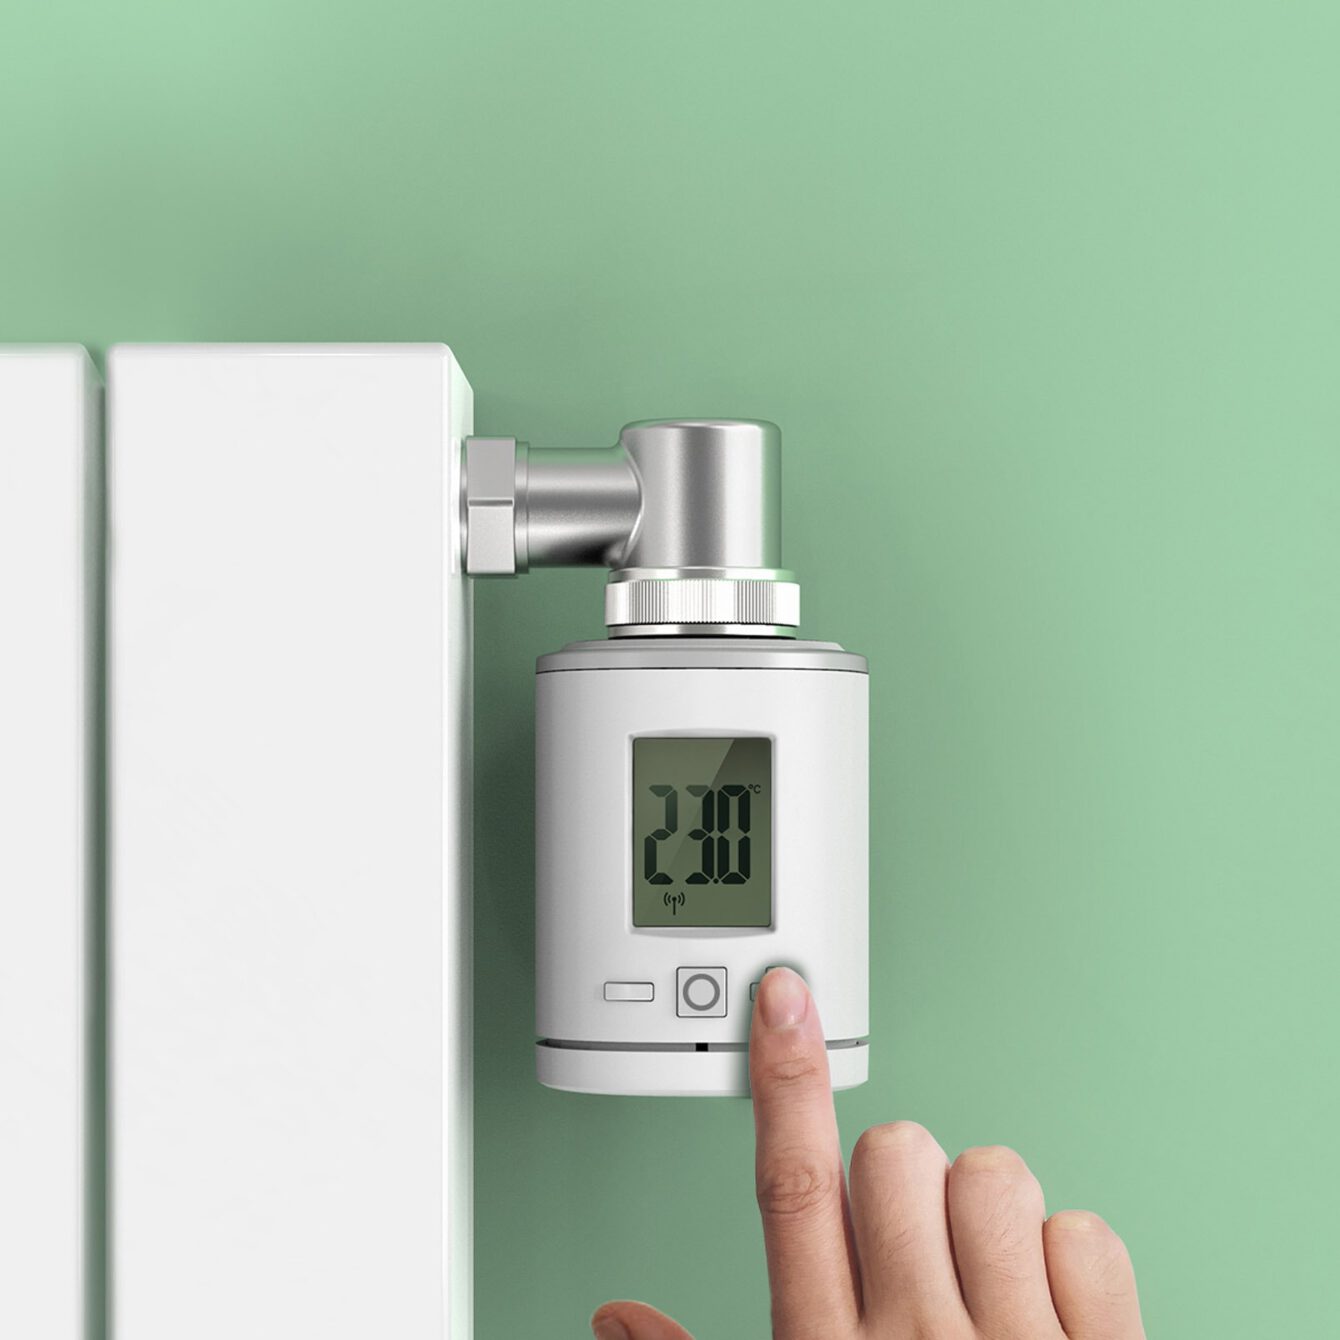 Aeotec Thermostat - Smarter AEOTEC Heizkörperthermostat mit modernem LCD Display | Radiamo